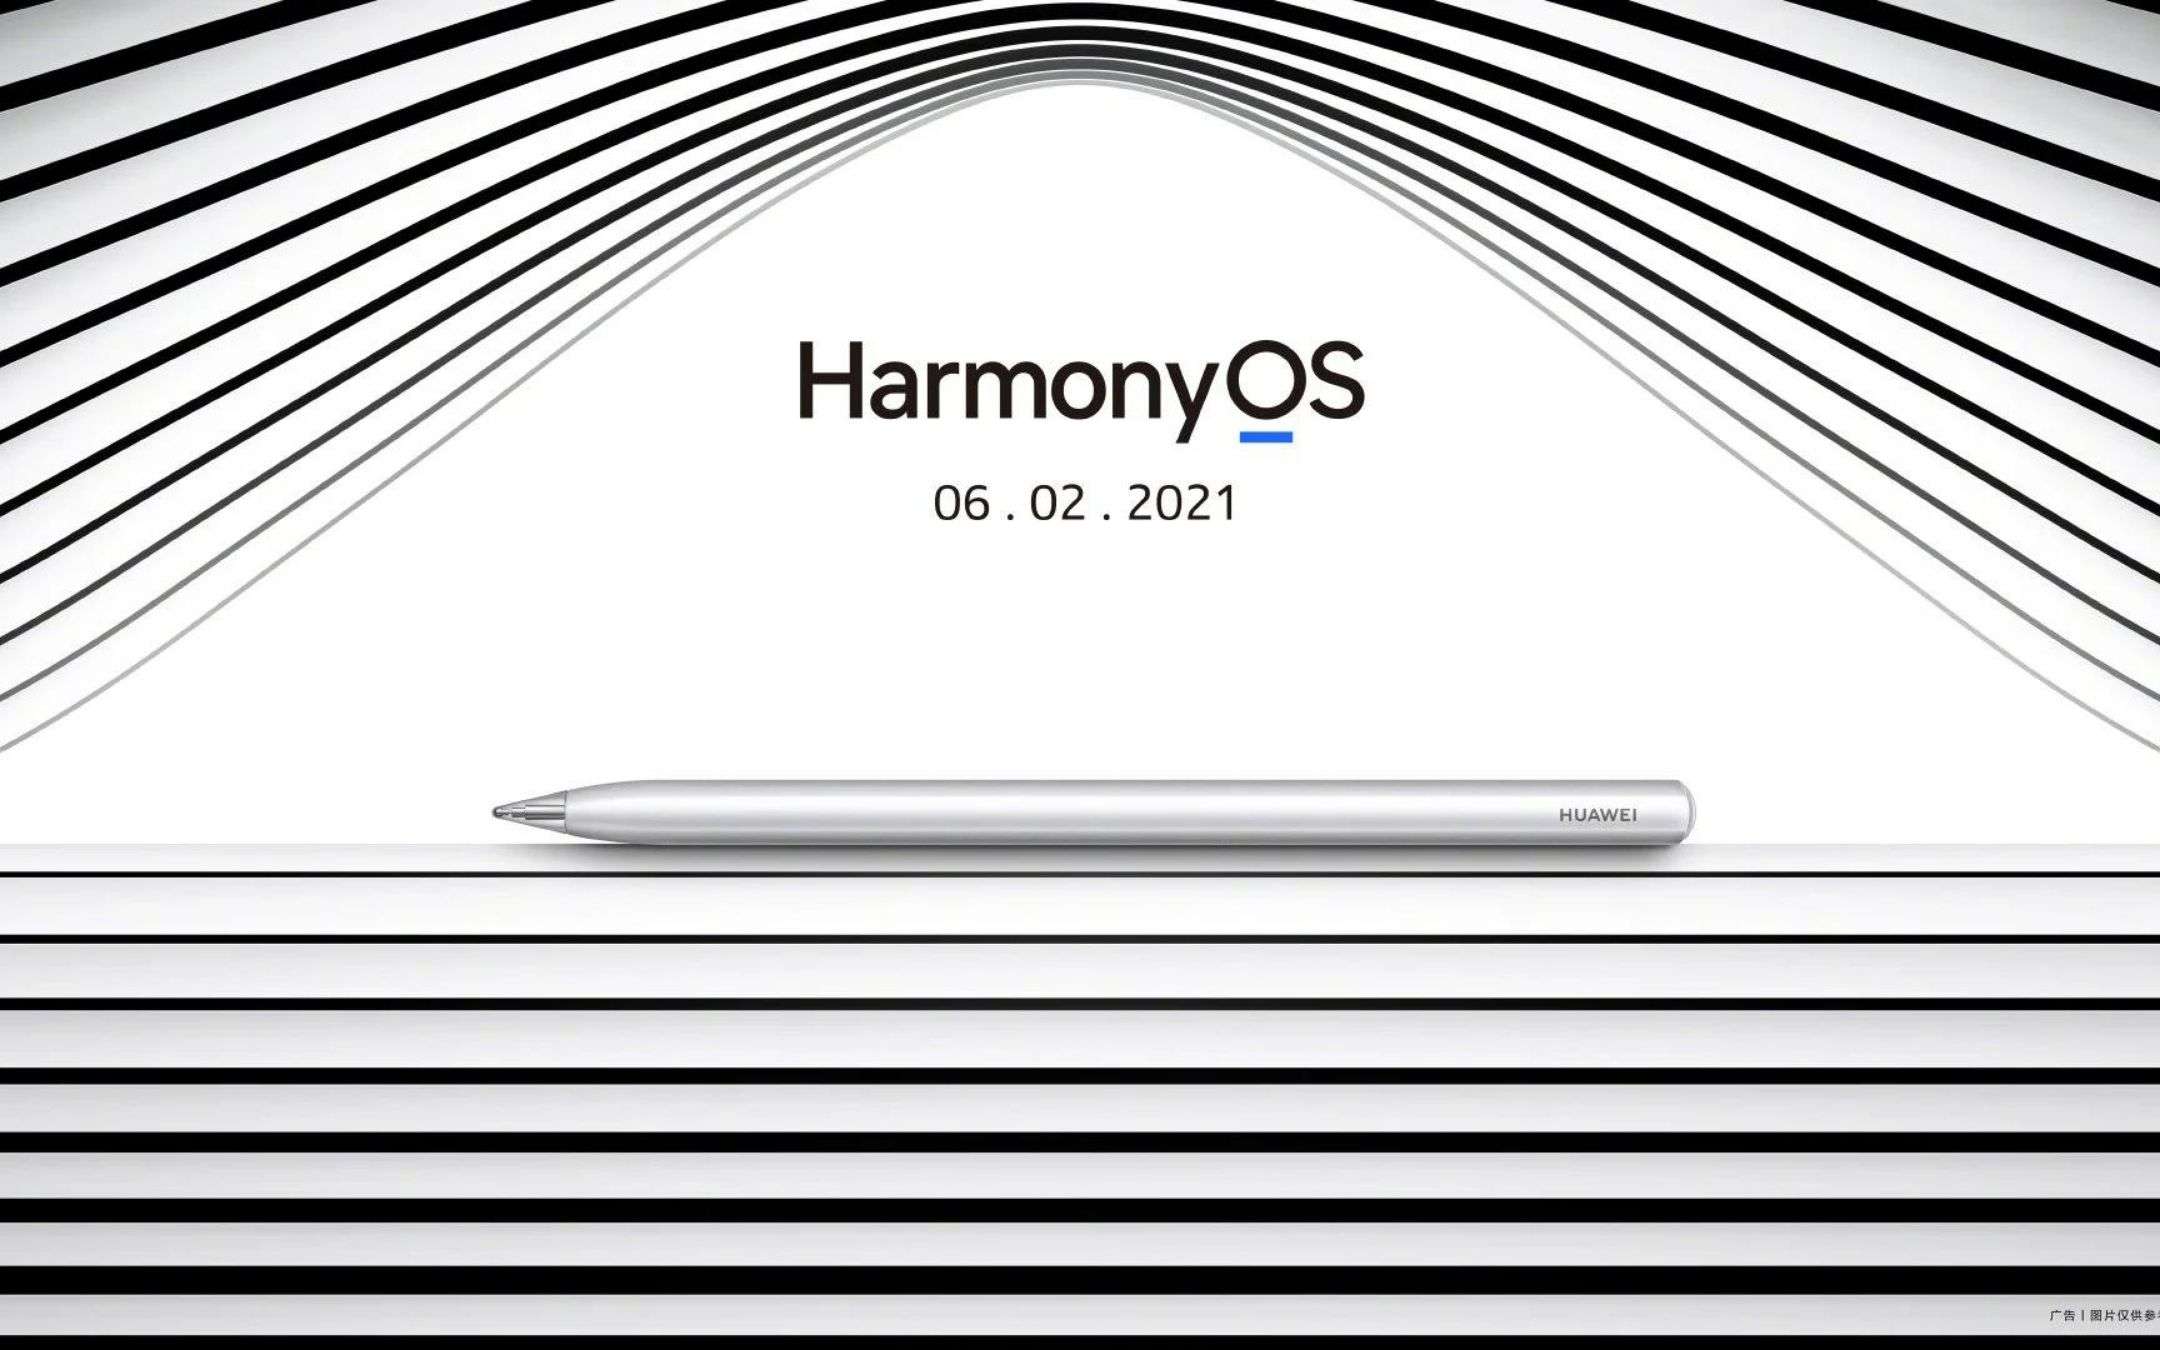 Huawei MatePad Pro: avrà HarmonyOS e la M Pen